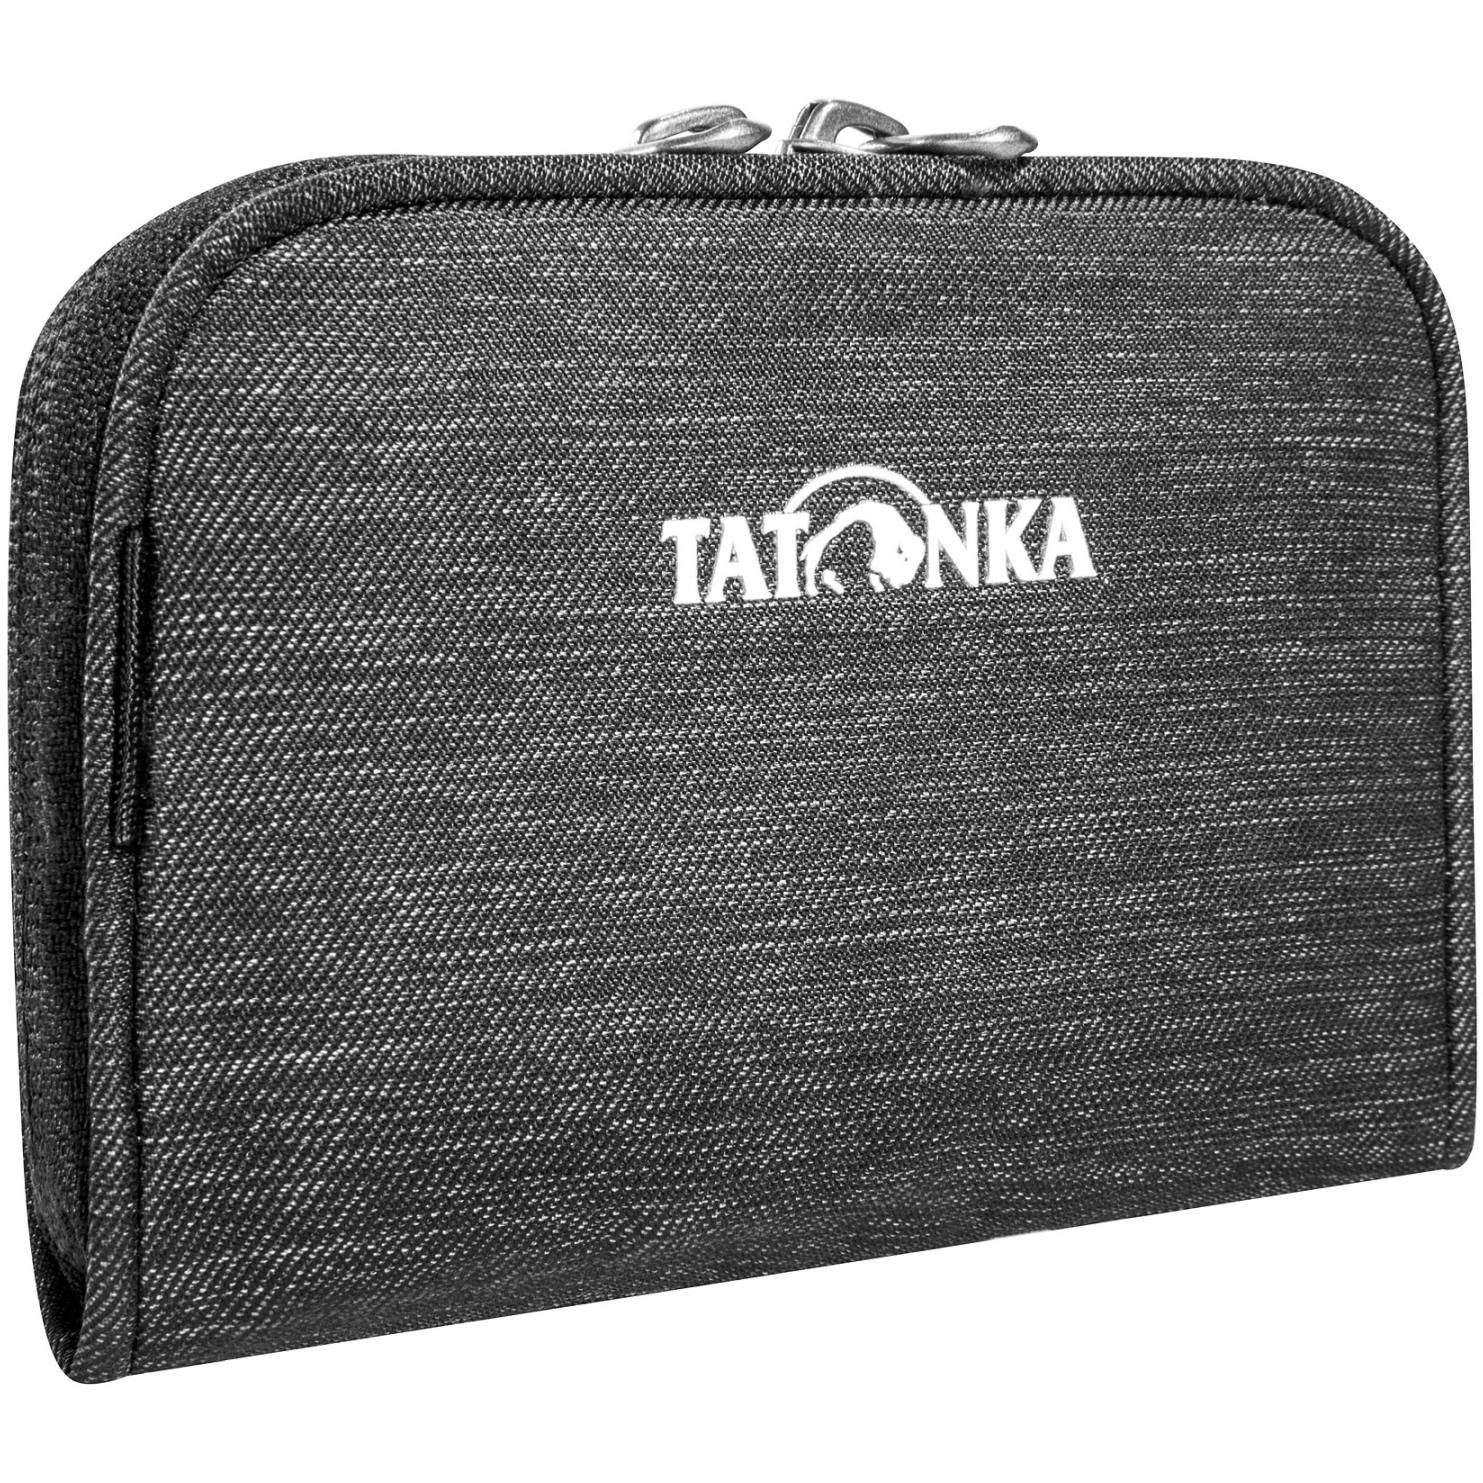 Picture of Tatonka Big Plain Wallet - off black